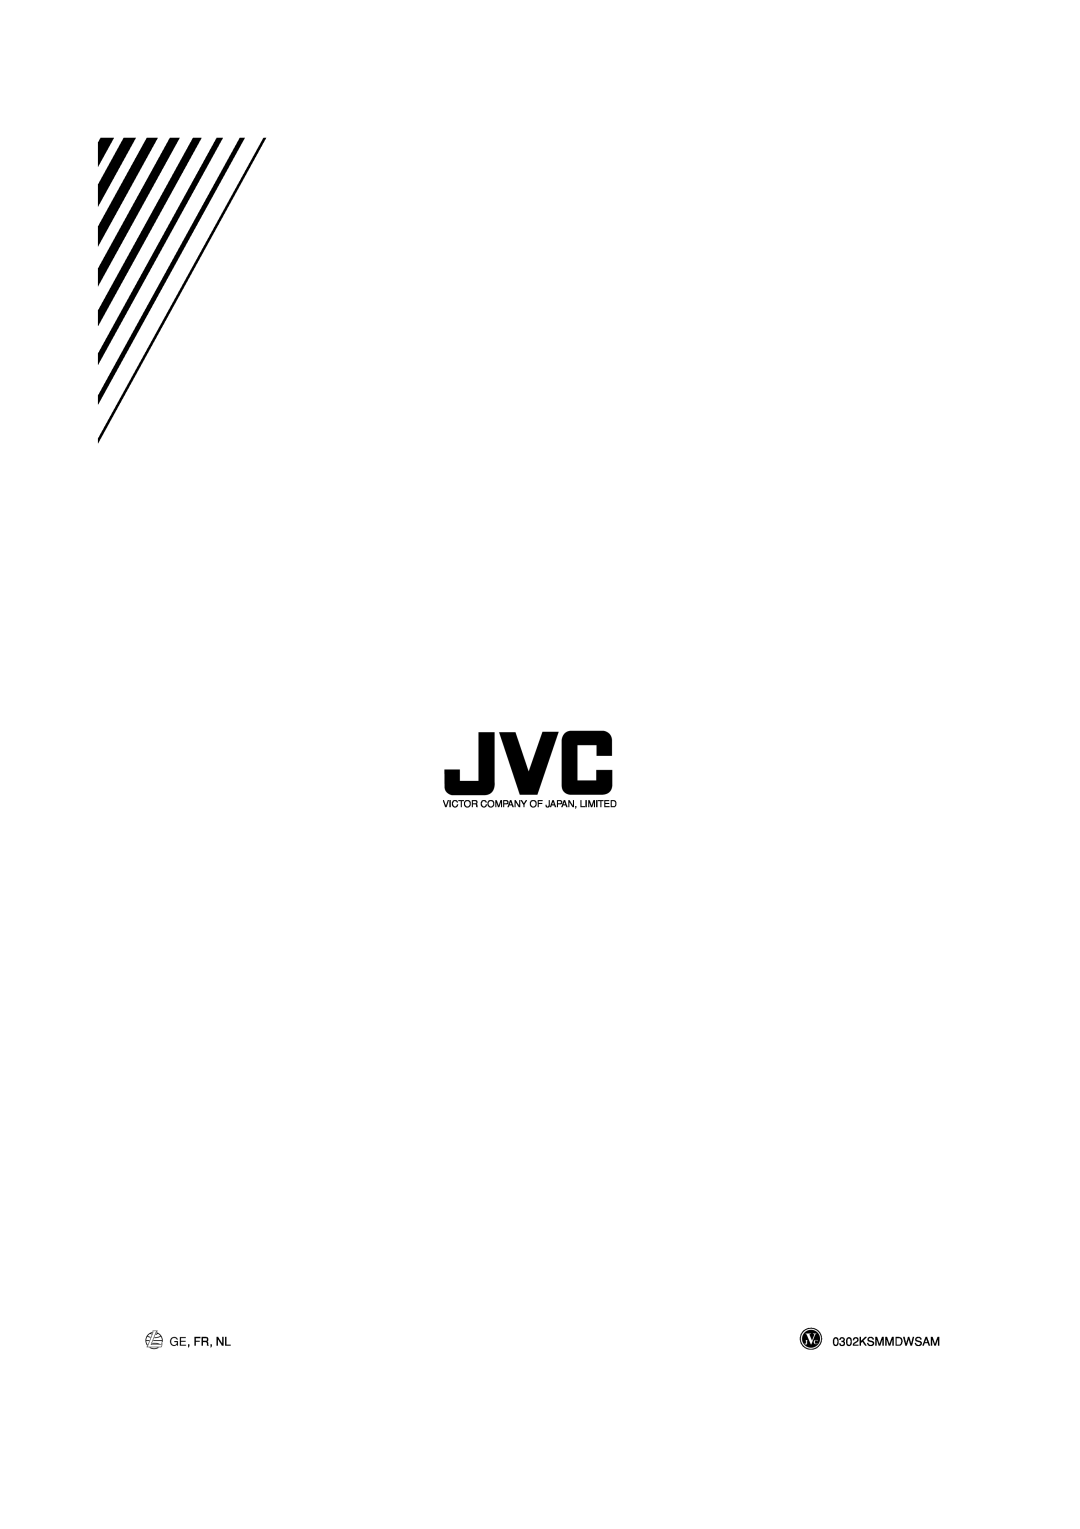 JVC CA-MXG700R, CA-MXG500R manual Ge, Fr, Nl, 0302KSMMDWSAM, Victor Company Of Japan, Limited 